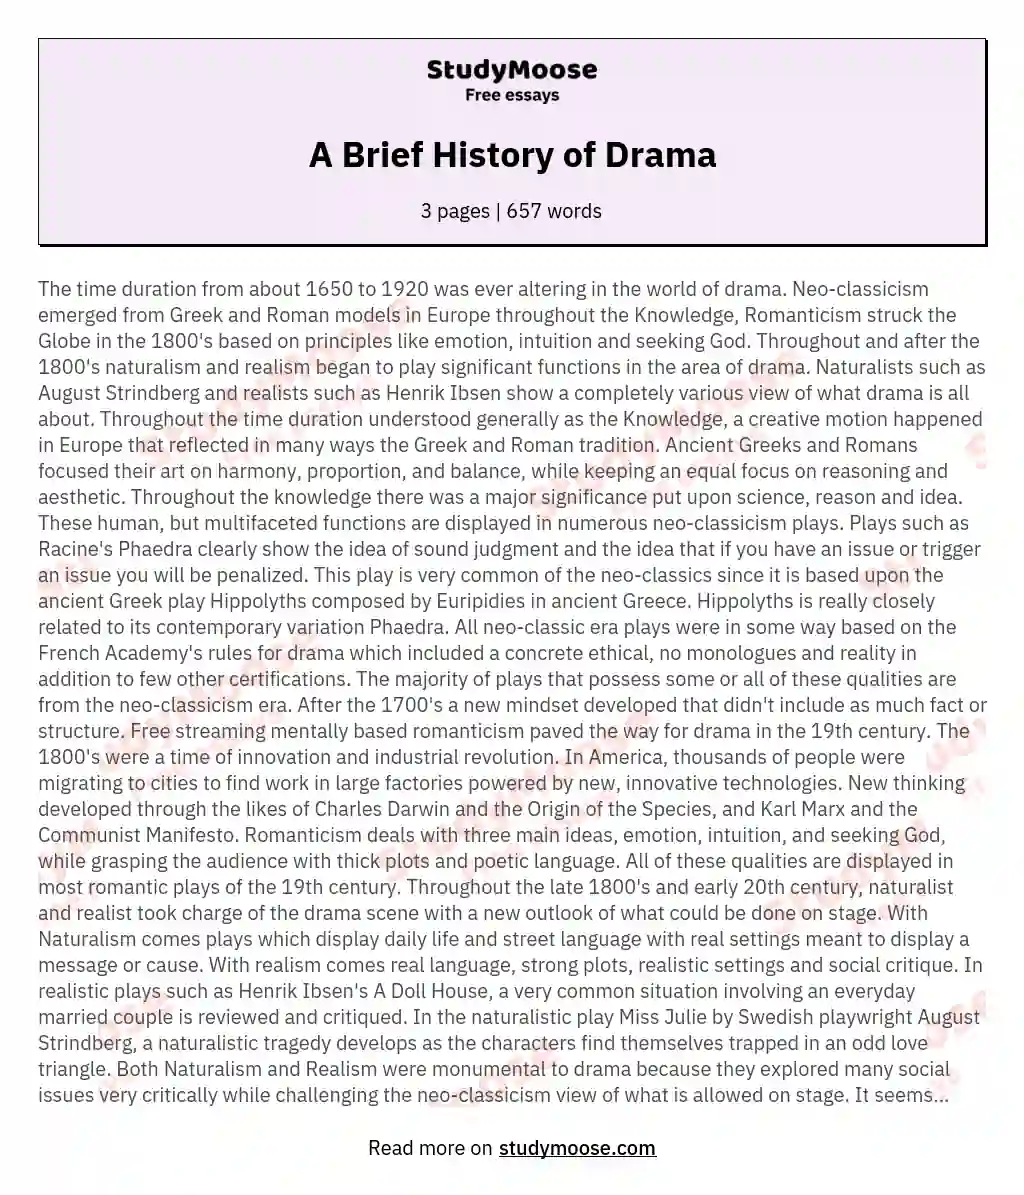 A Brief History of Drama essay